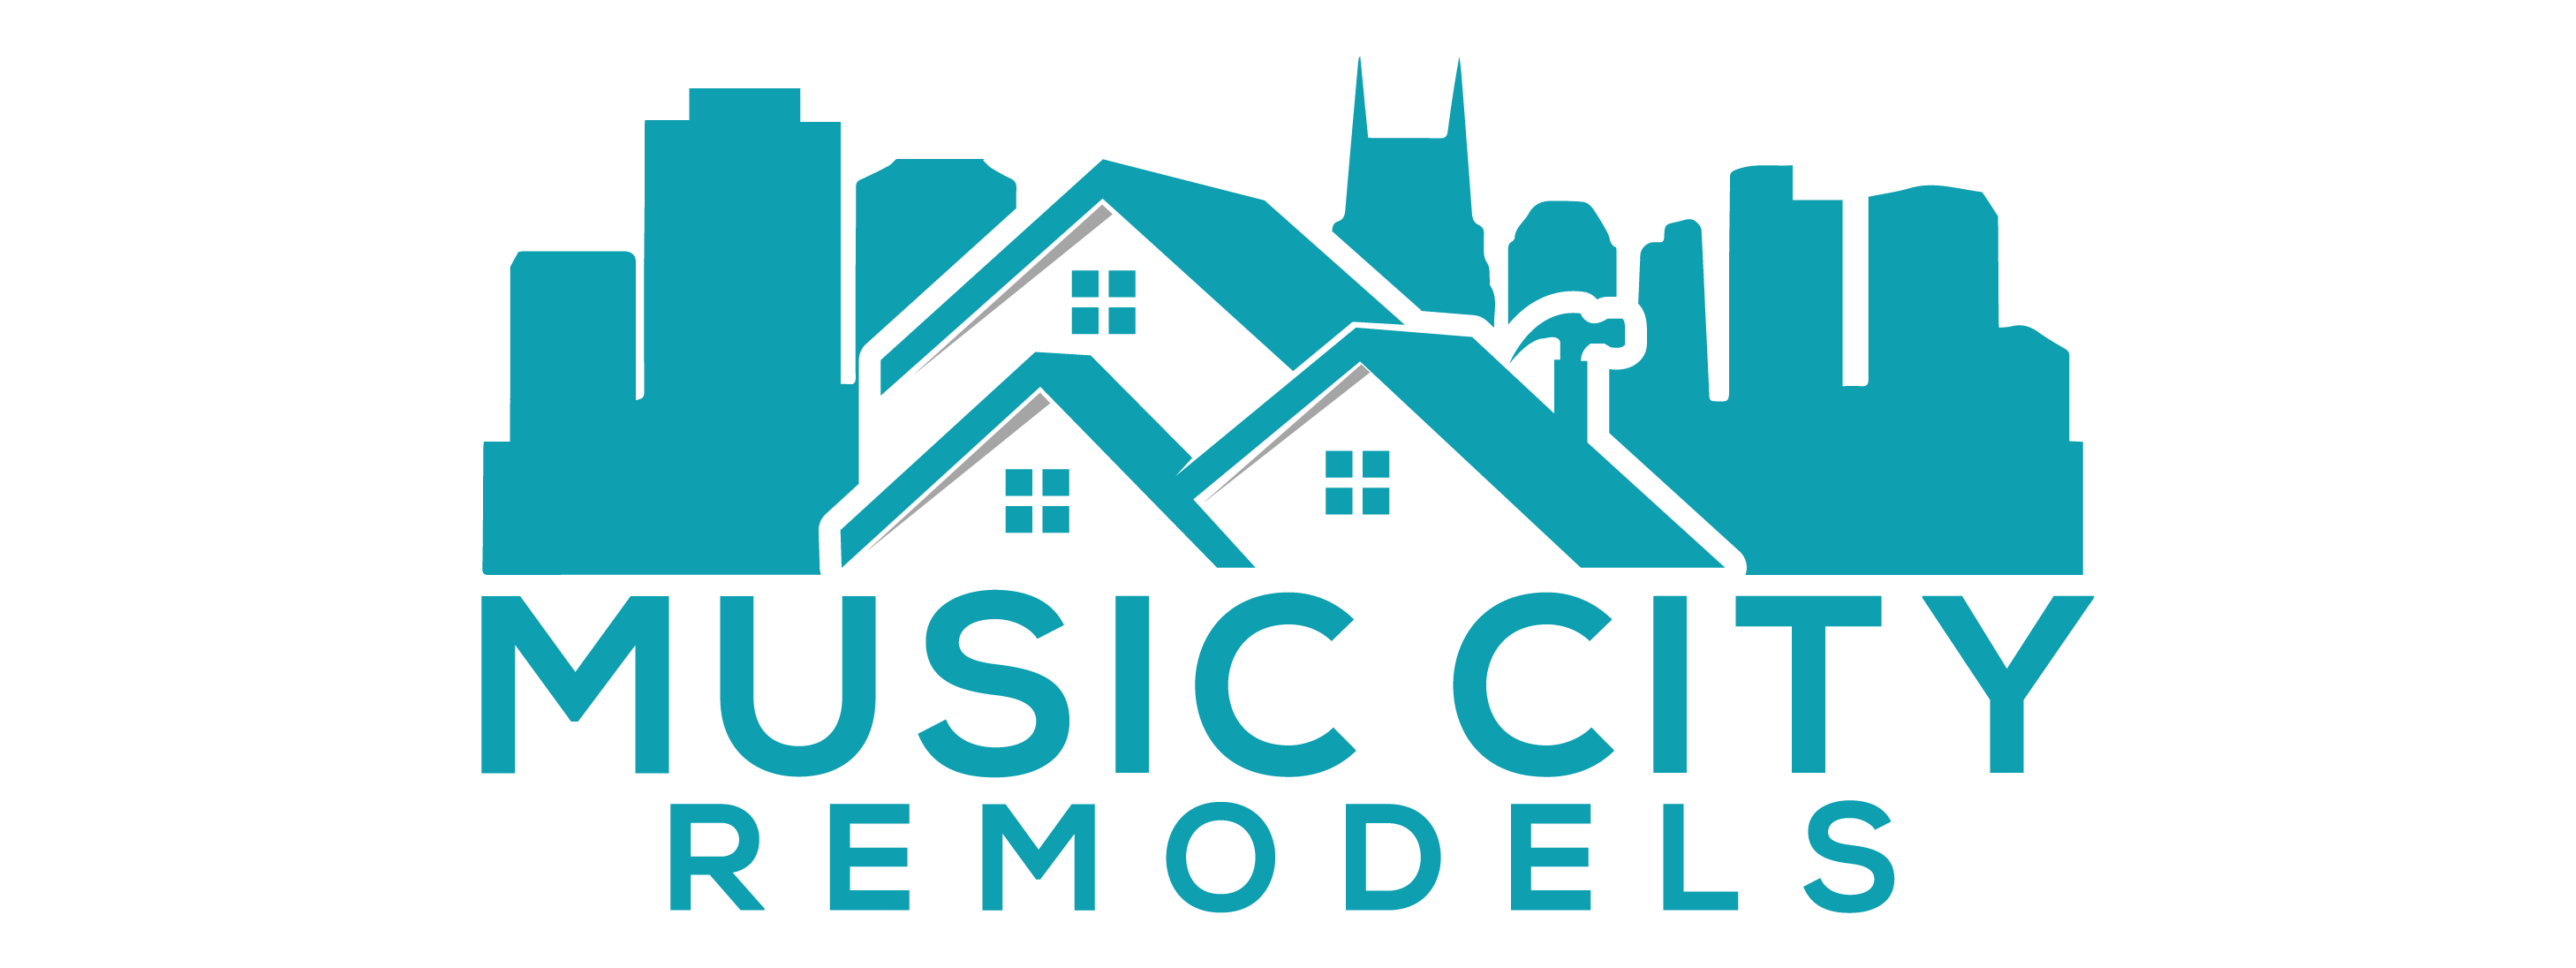 Music City remodels-01